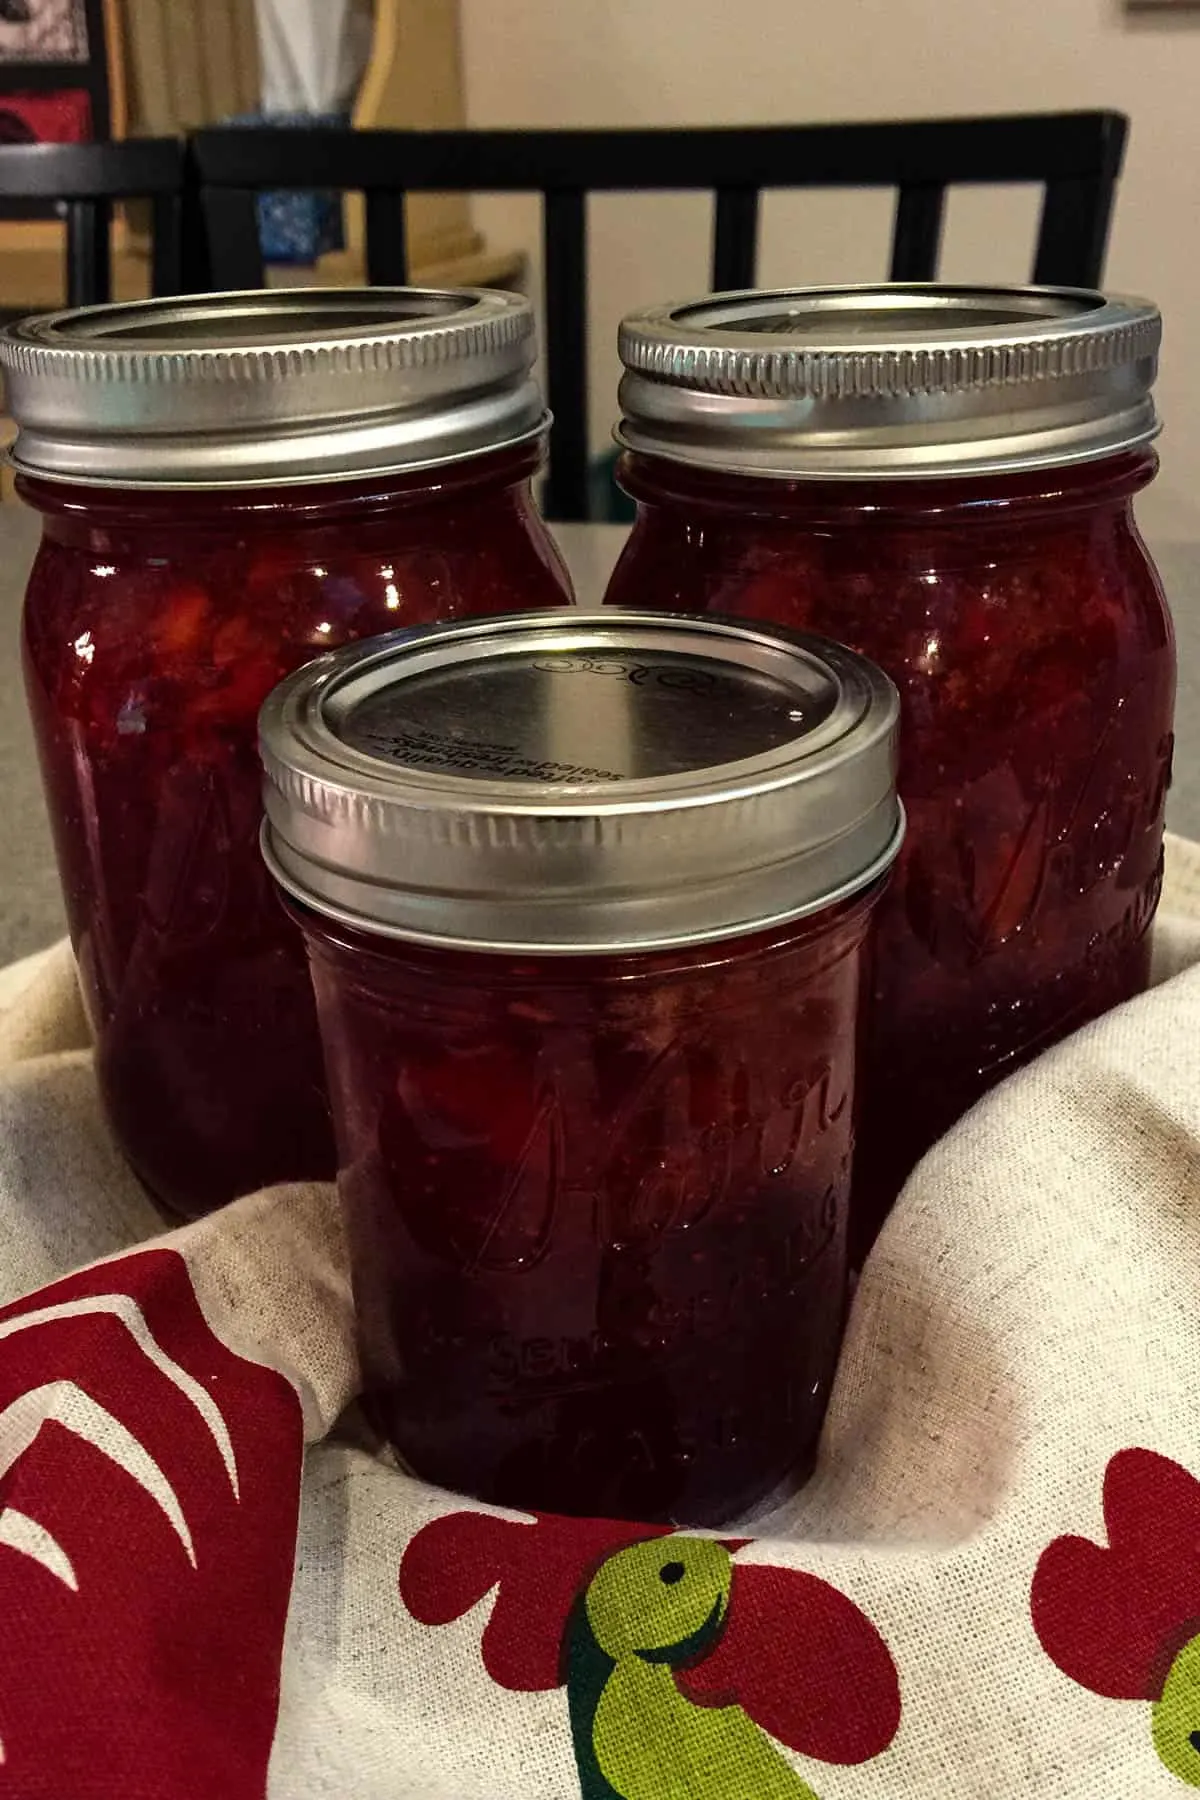 Three jars of canned strawberry jam.